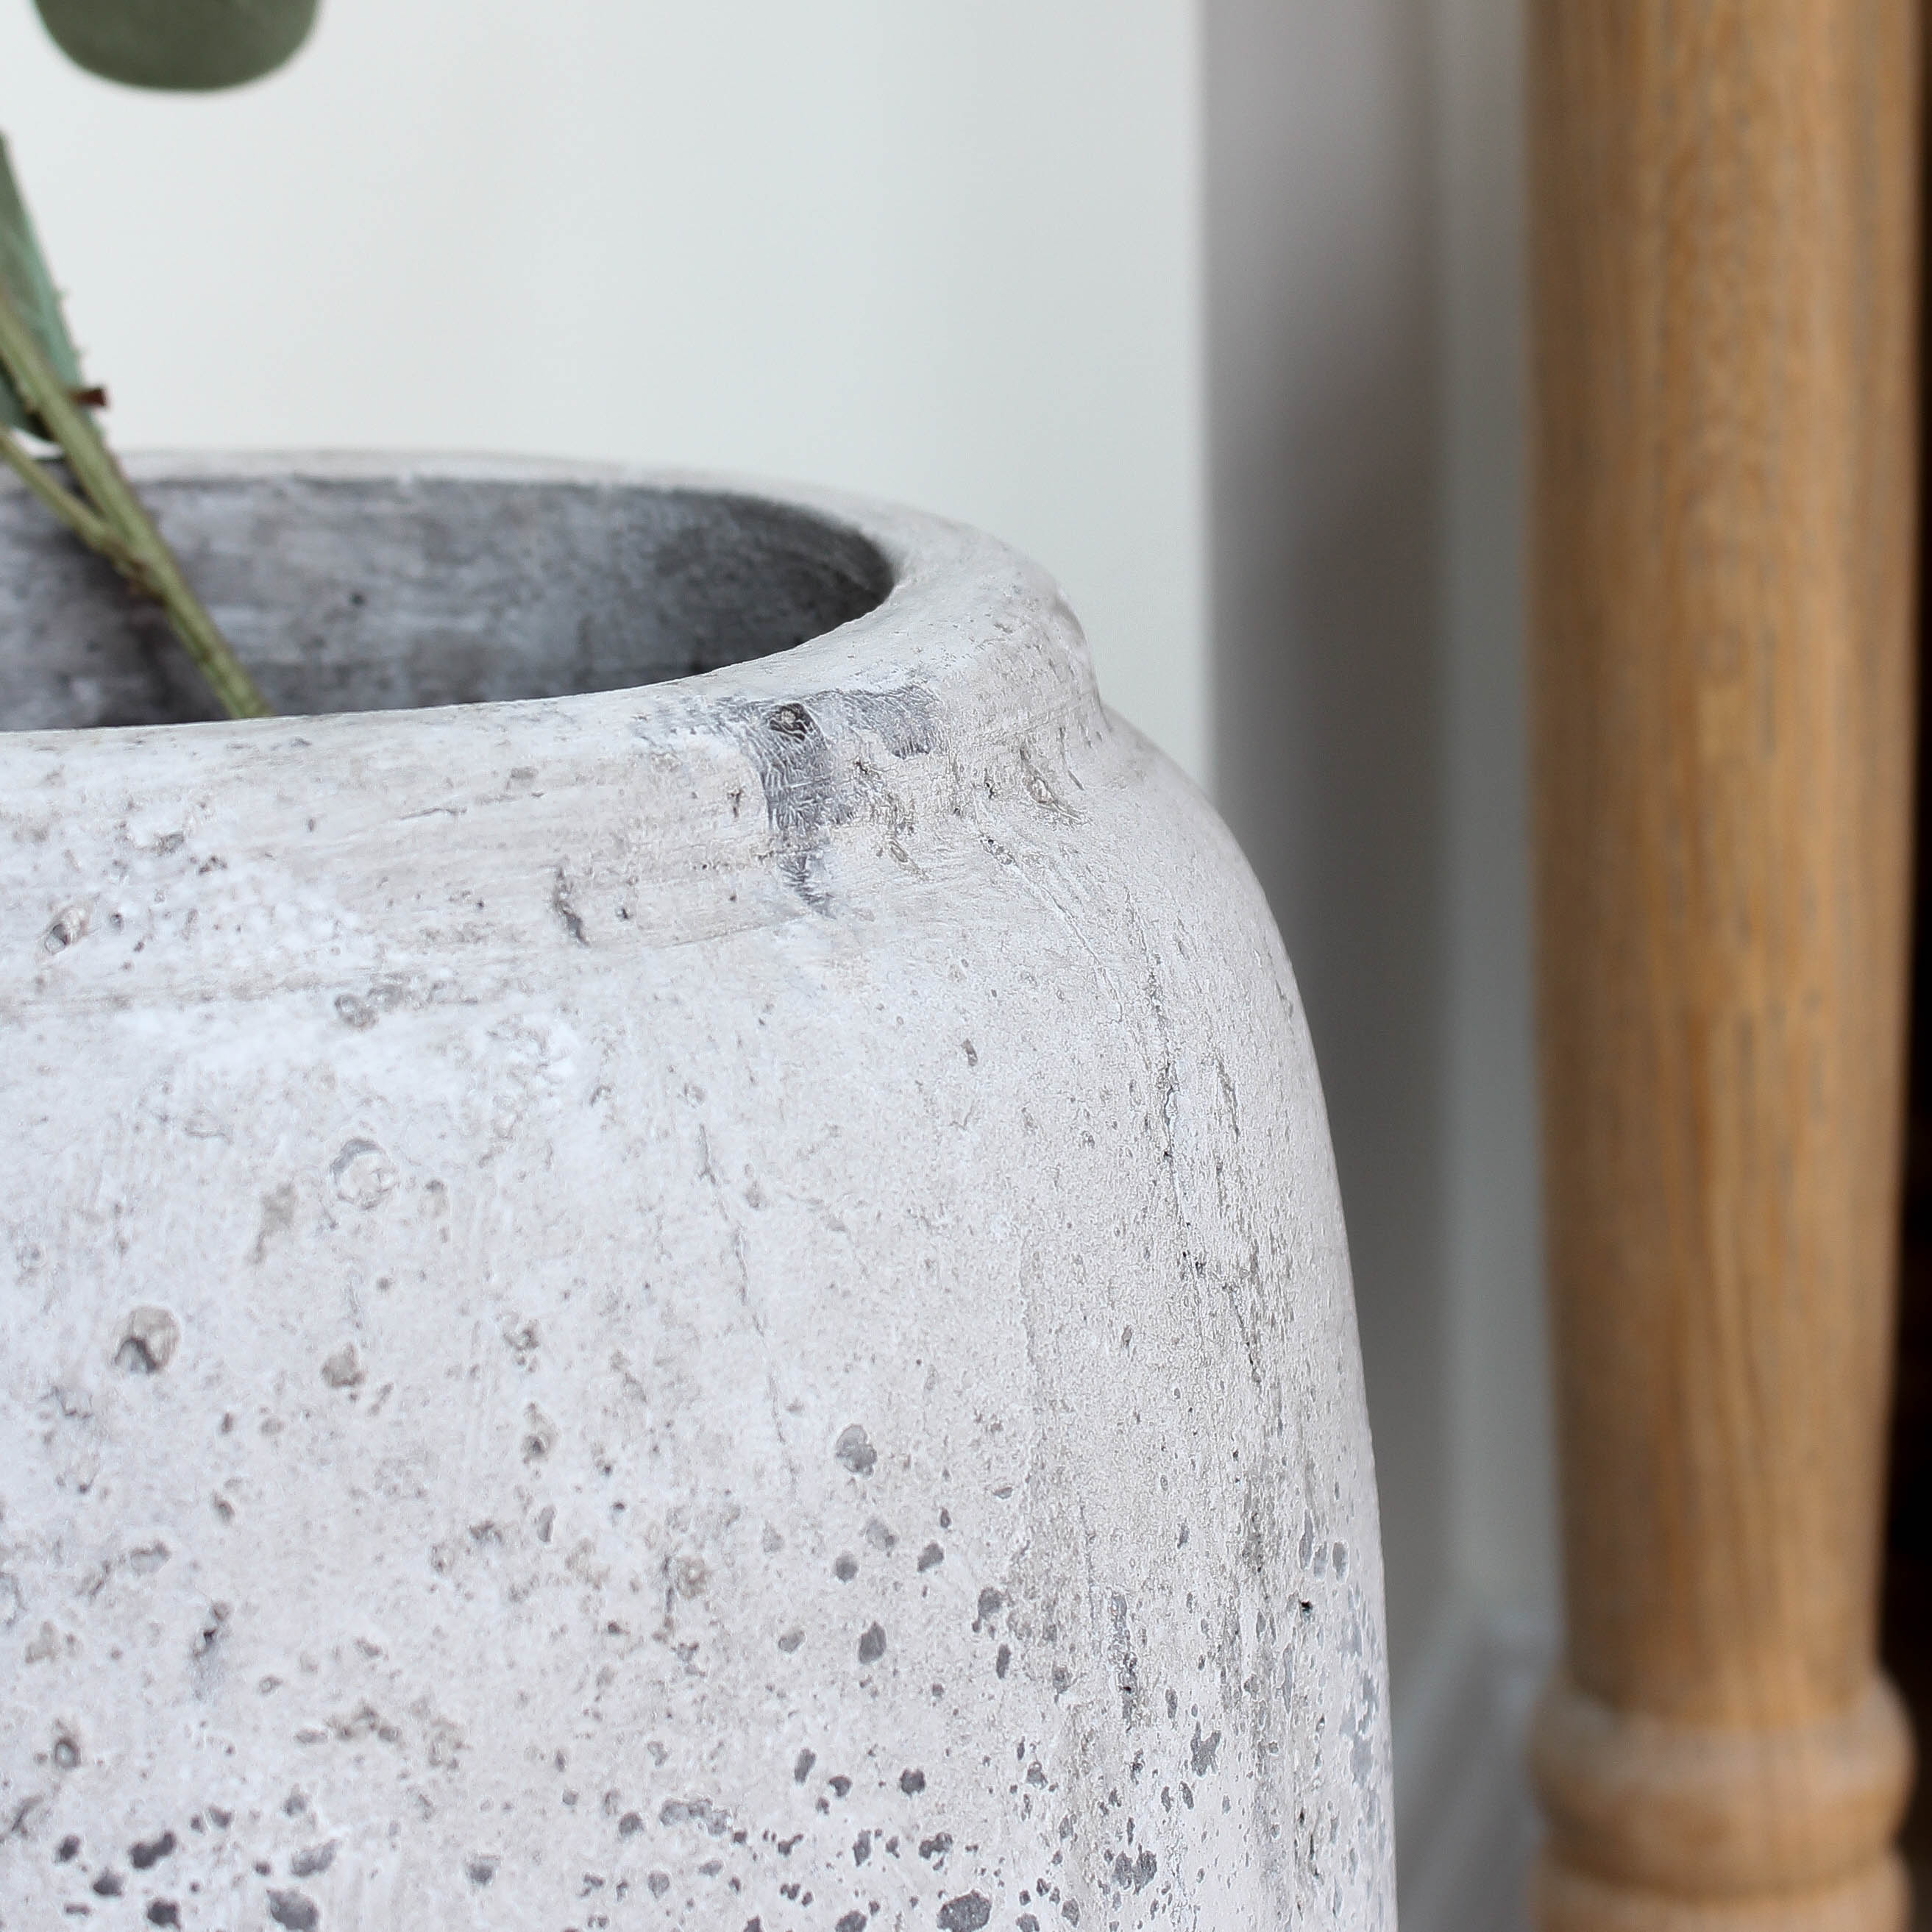 Tall Distressed Stoneware Vase - Marquis & Dawe